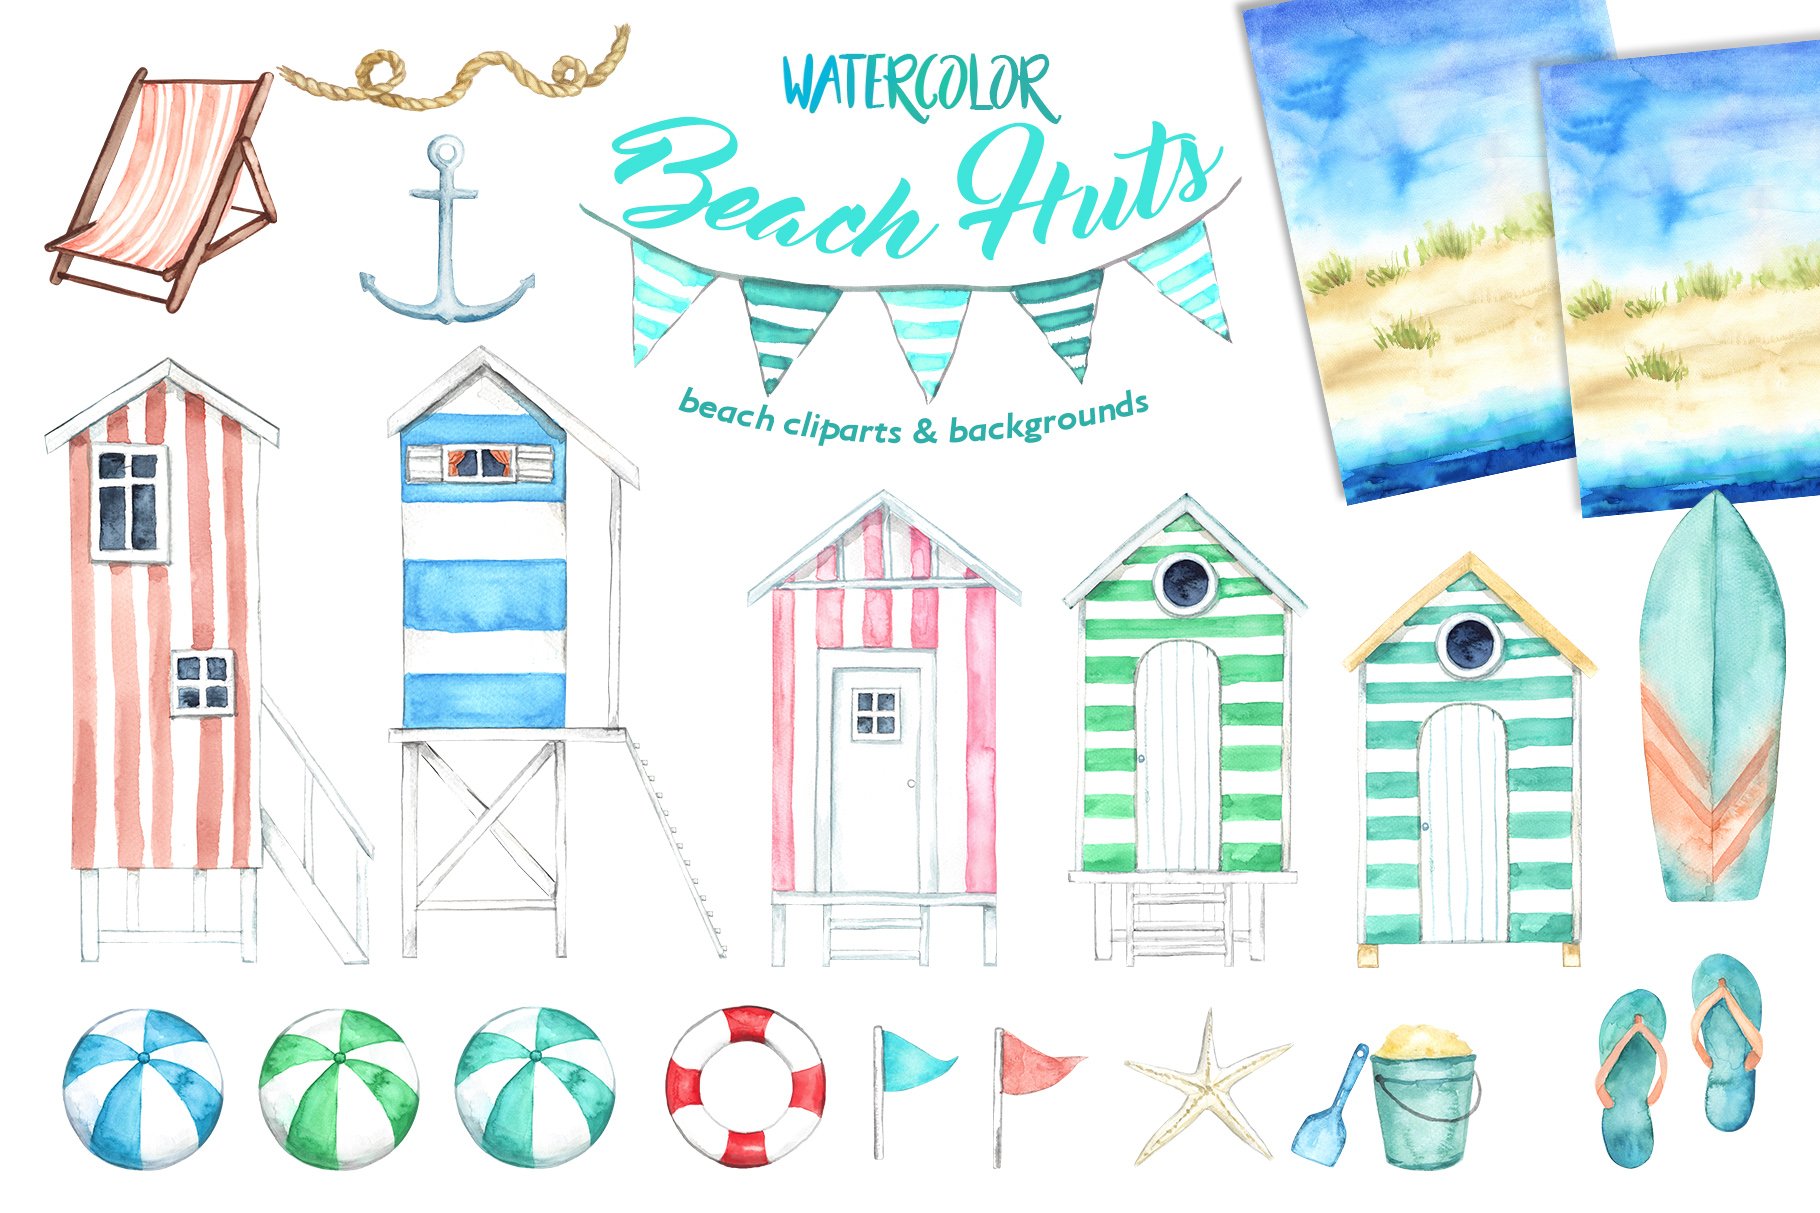 Watercolor Beach Huts cover image.